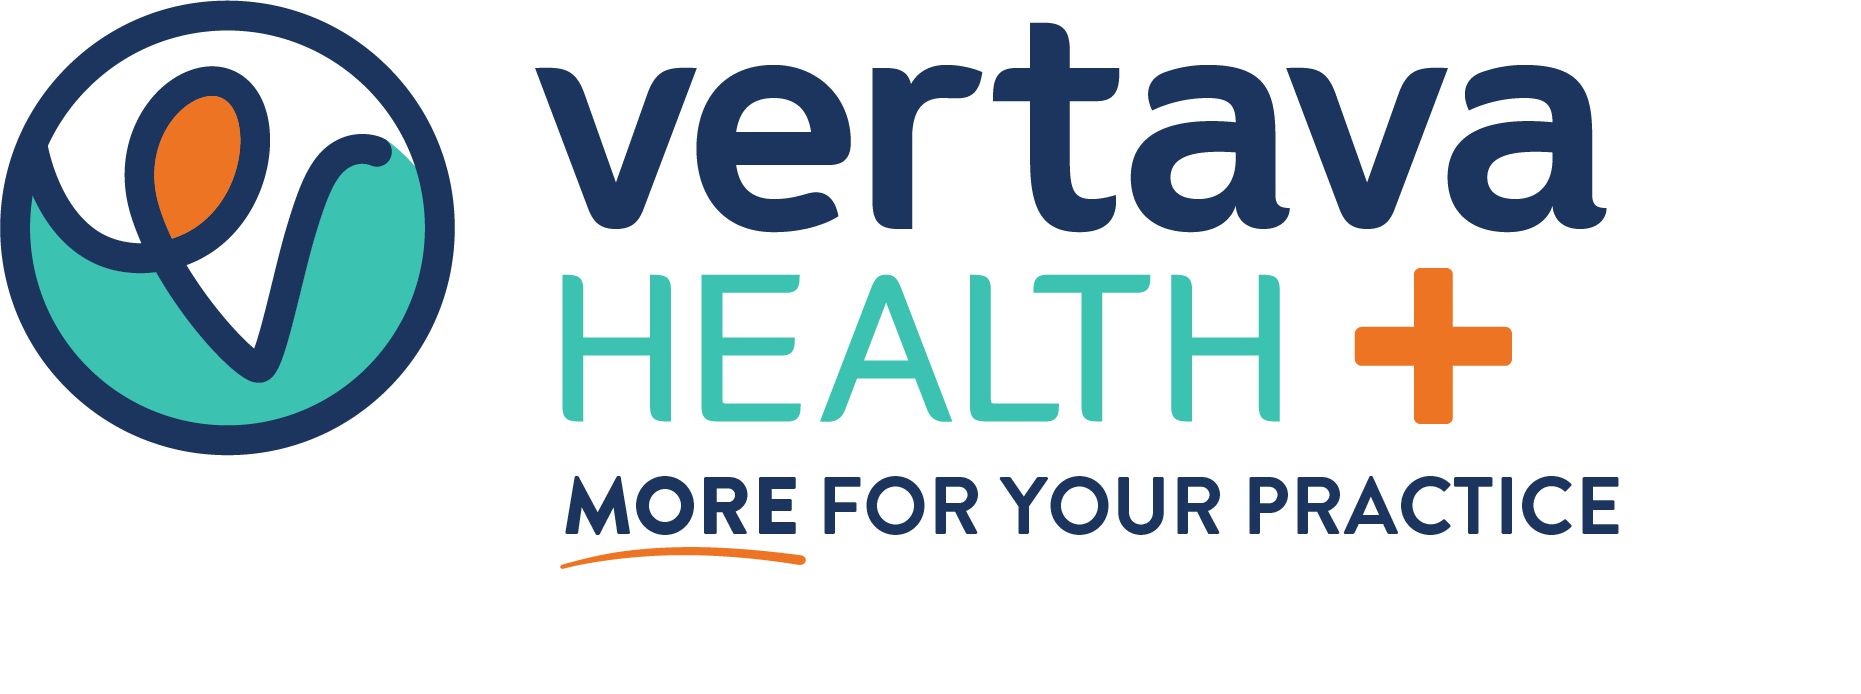 Vertava Health+ Program Vertava Health